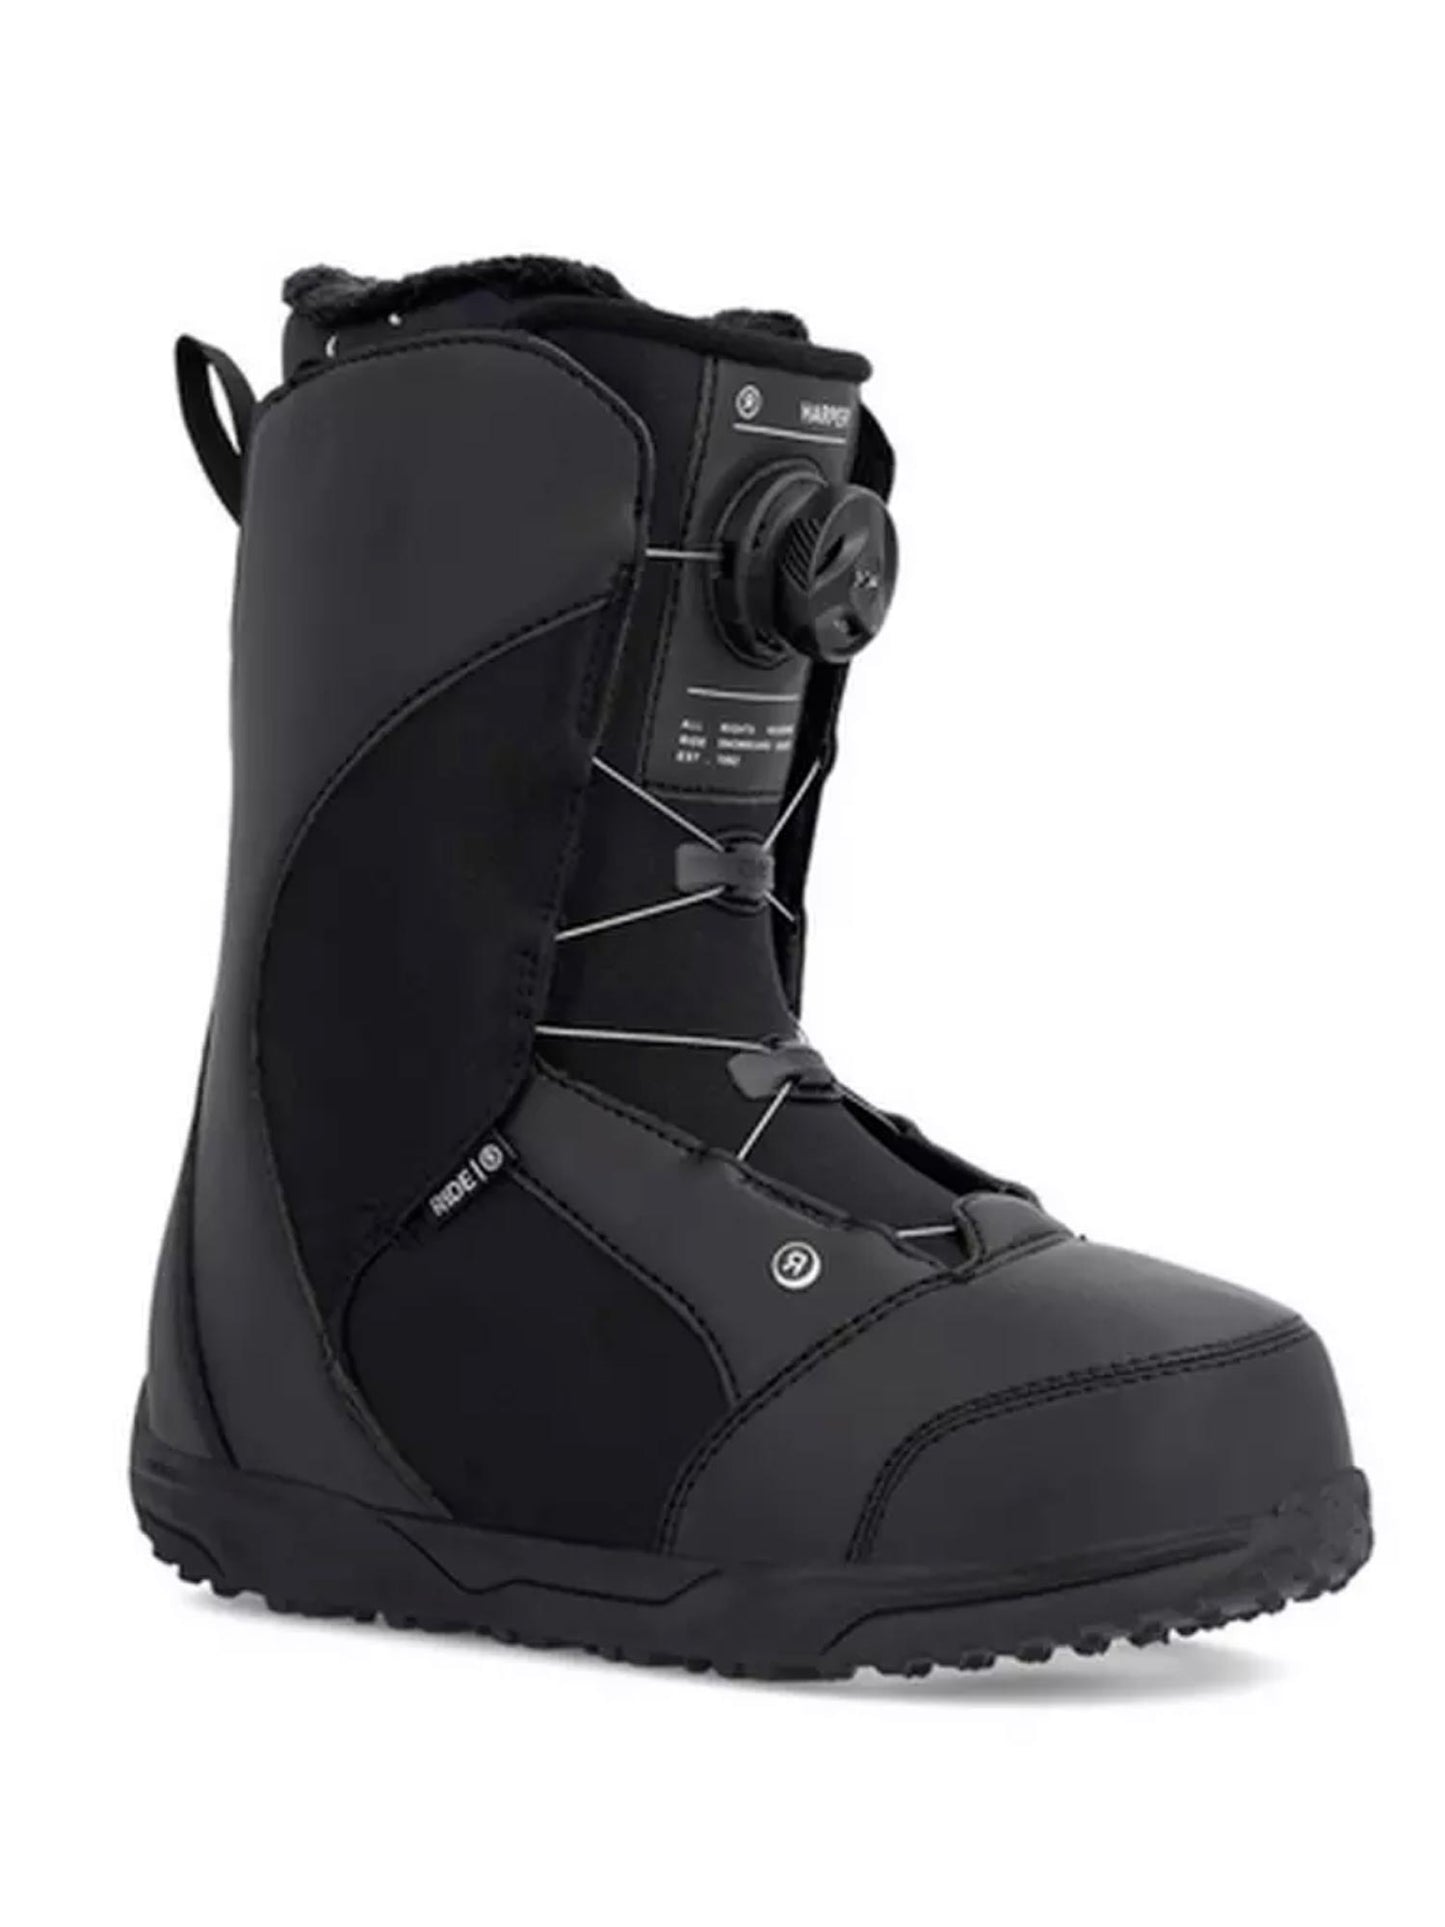 women's Ride Harper snowboard boots, black